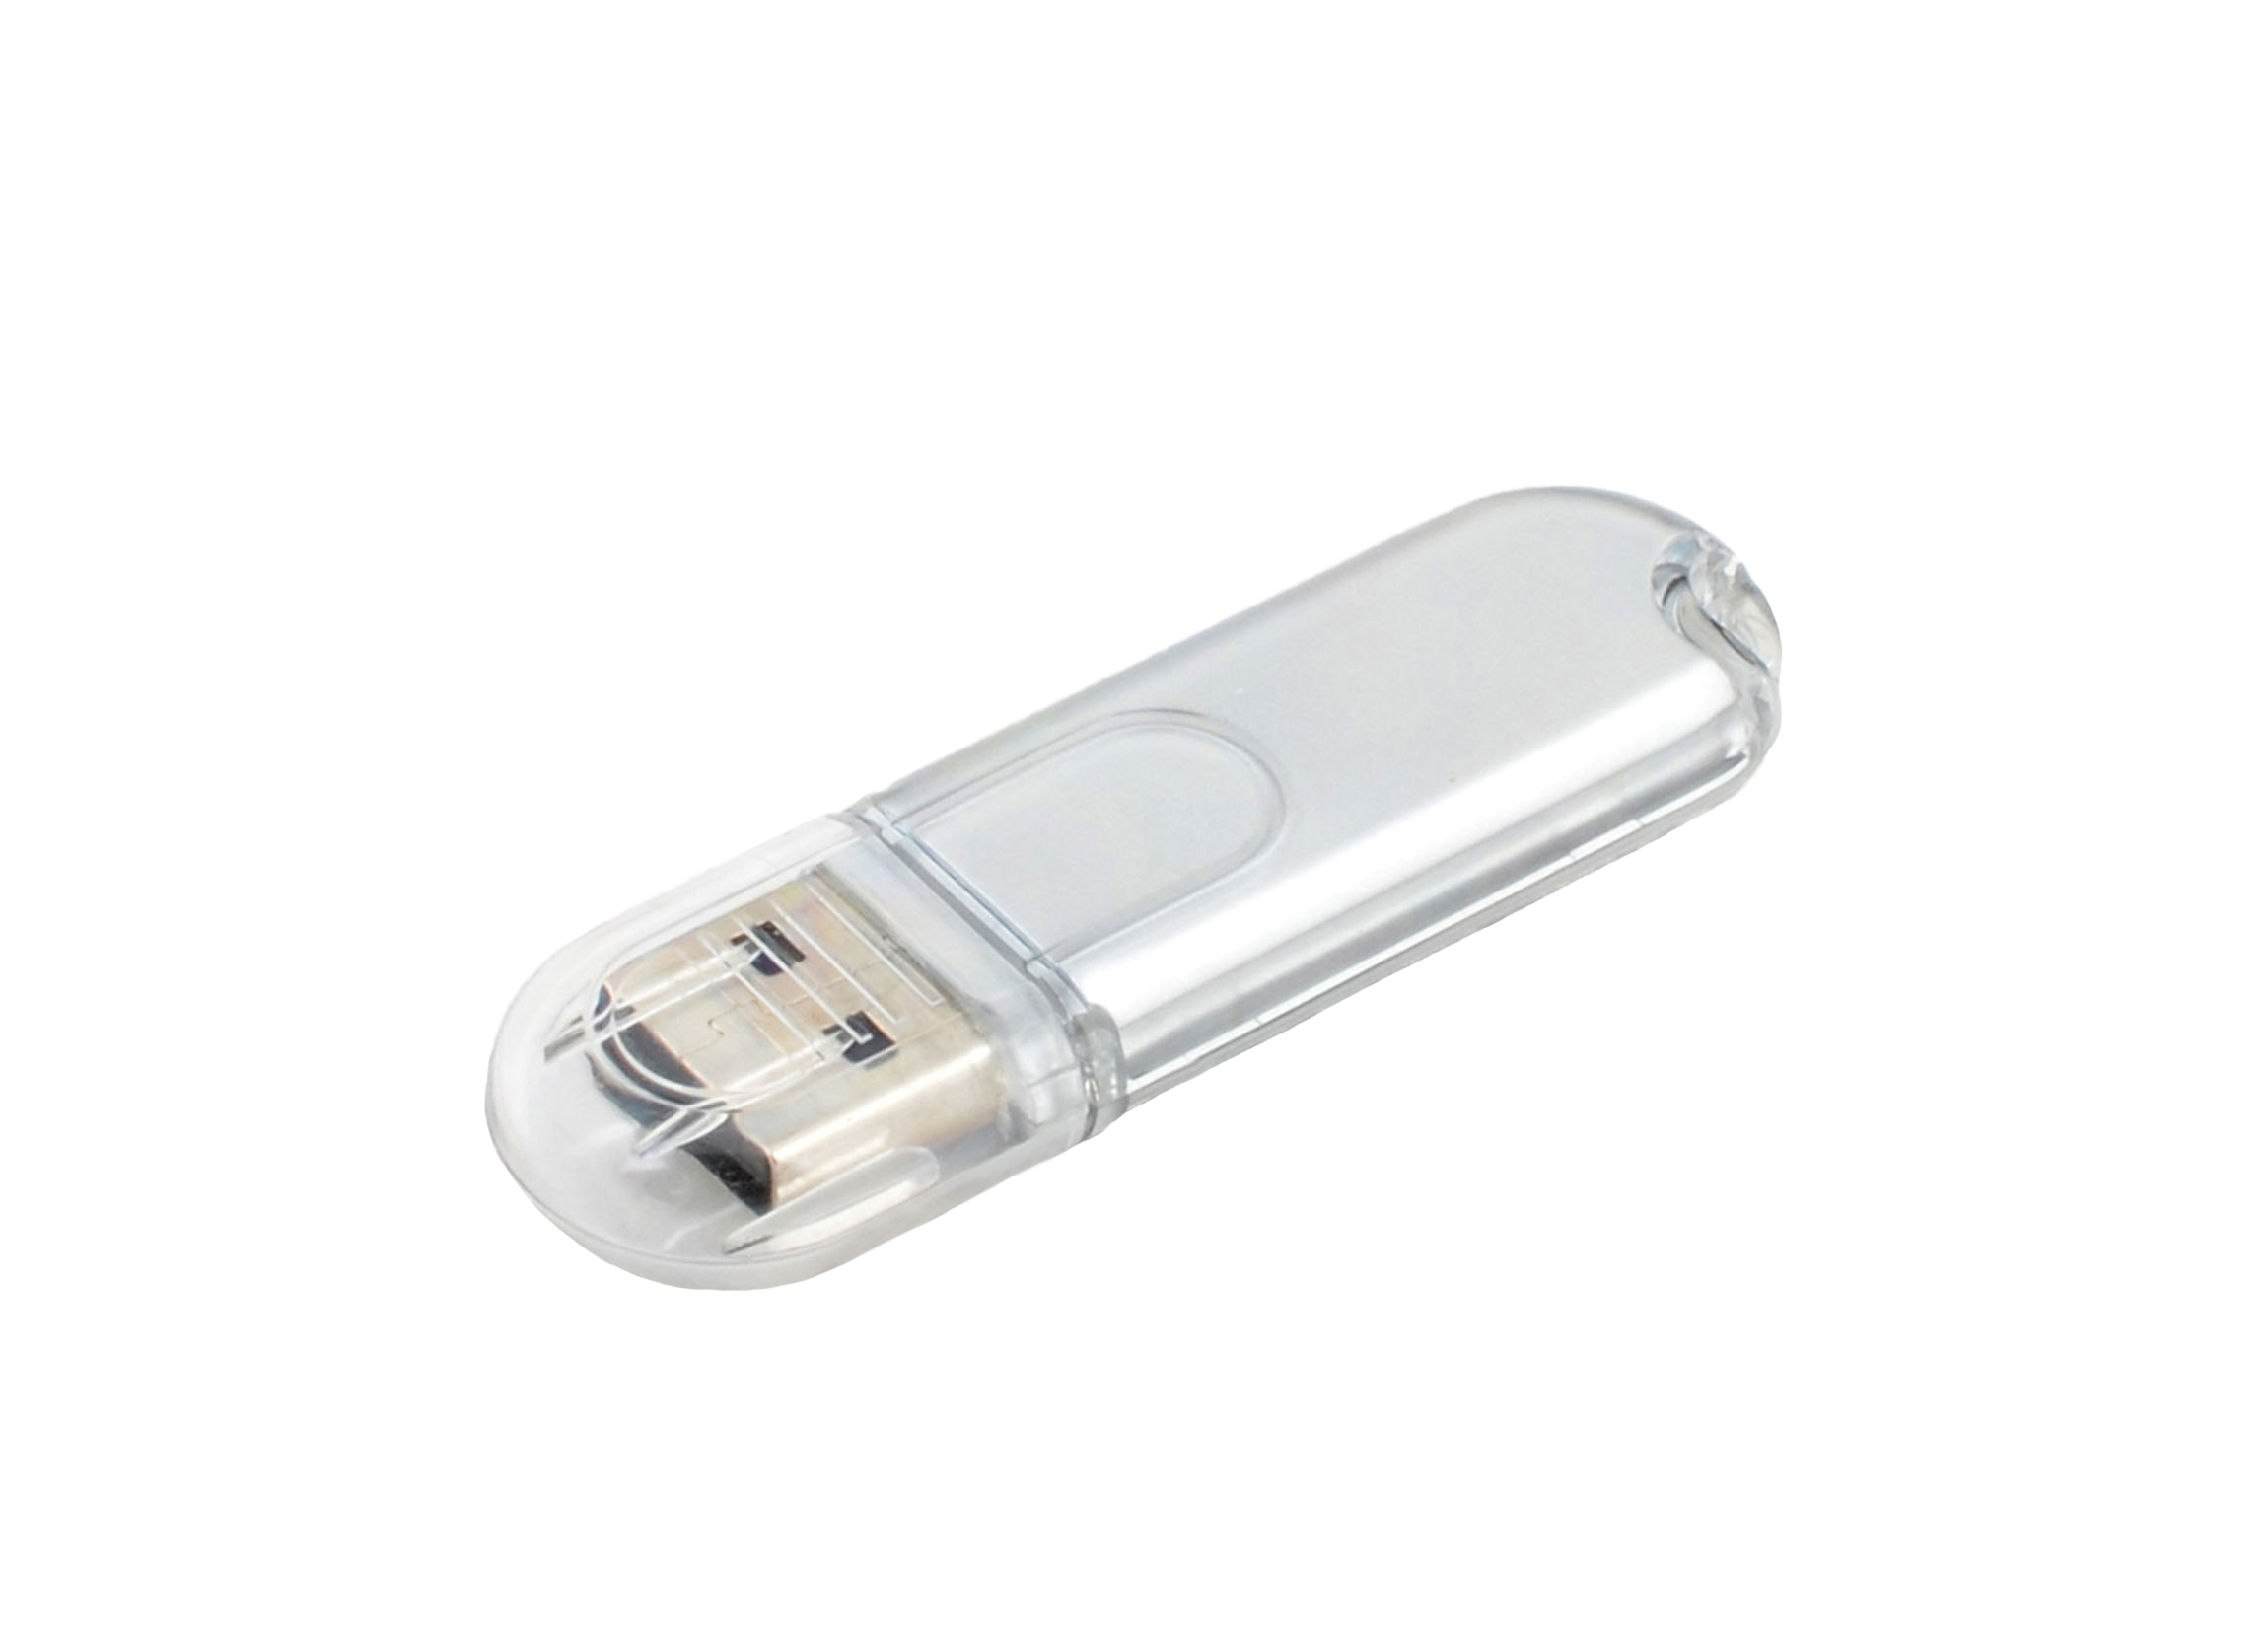 Classic USB flash drive DEPORT silver